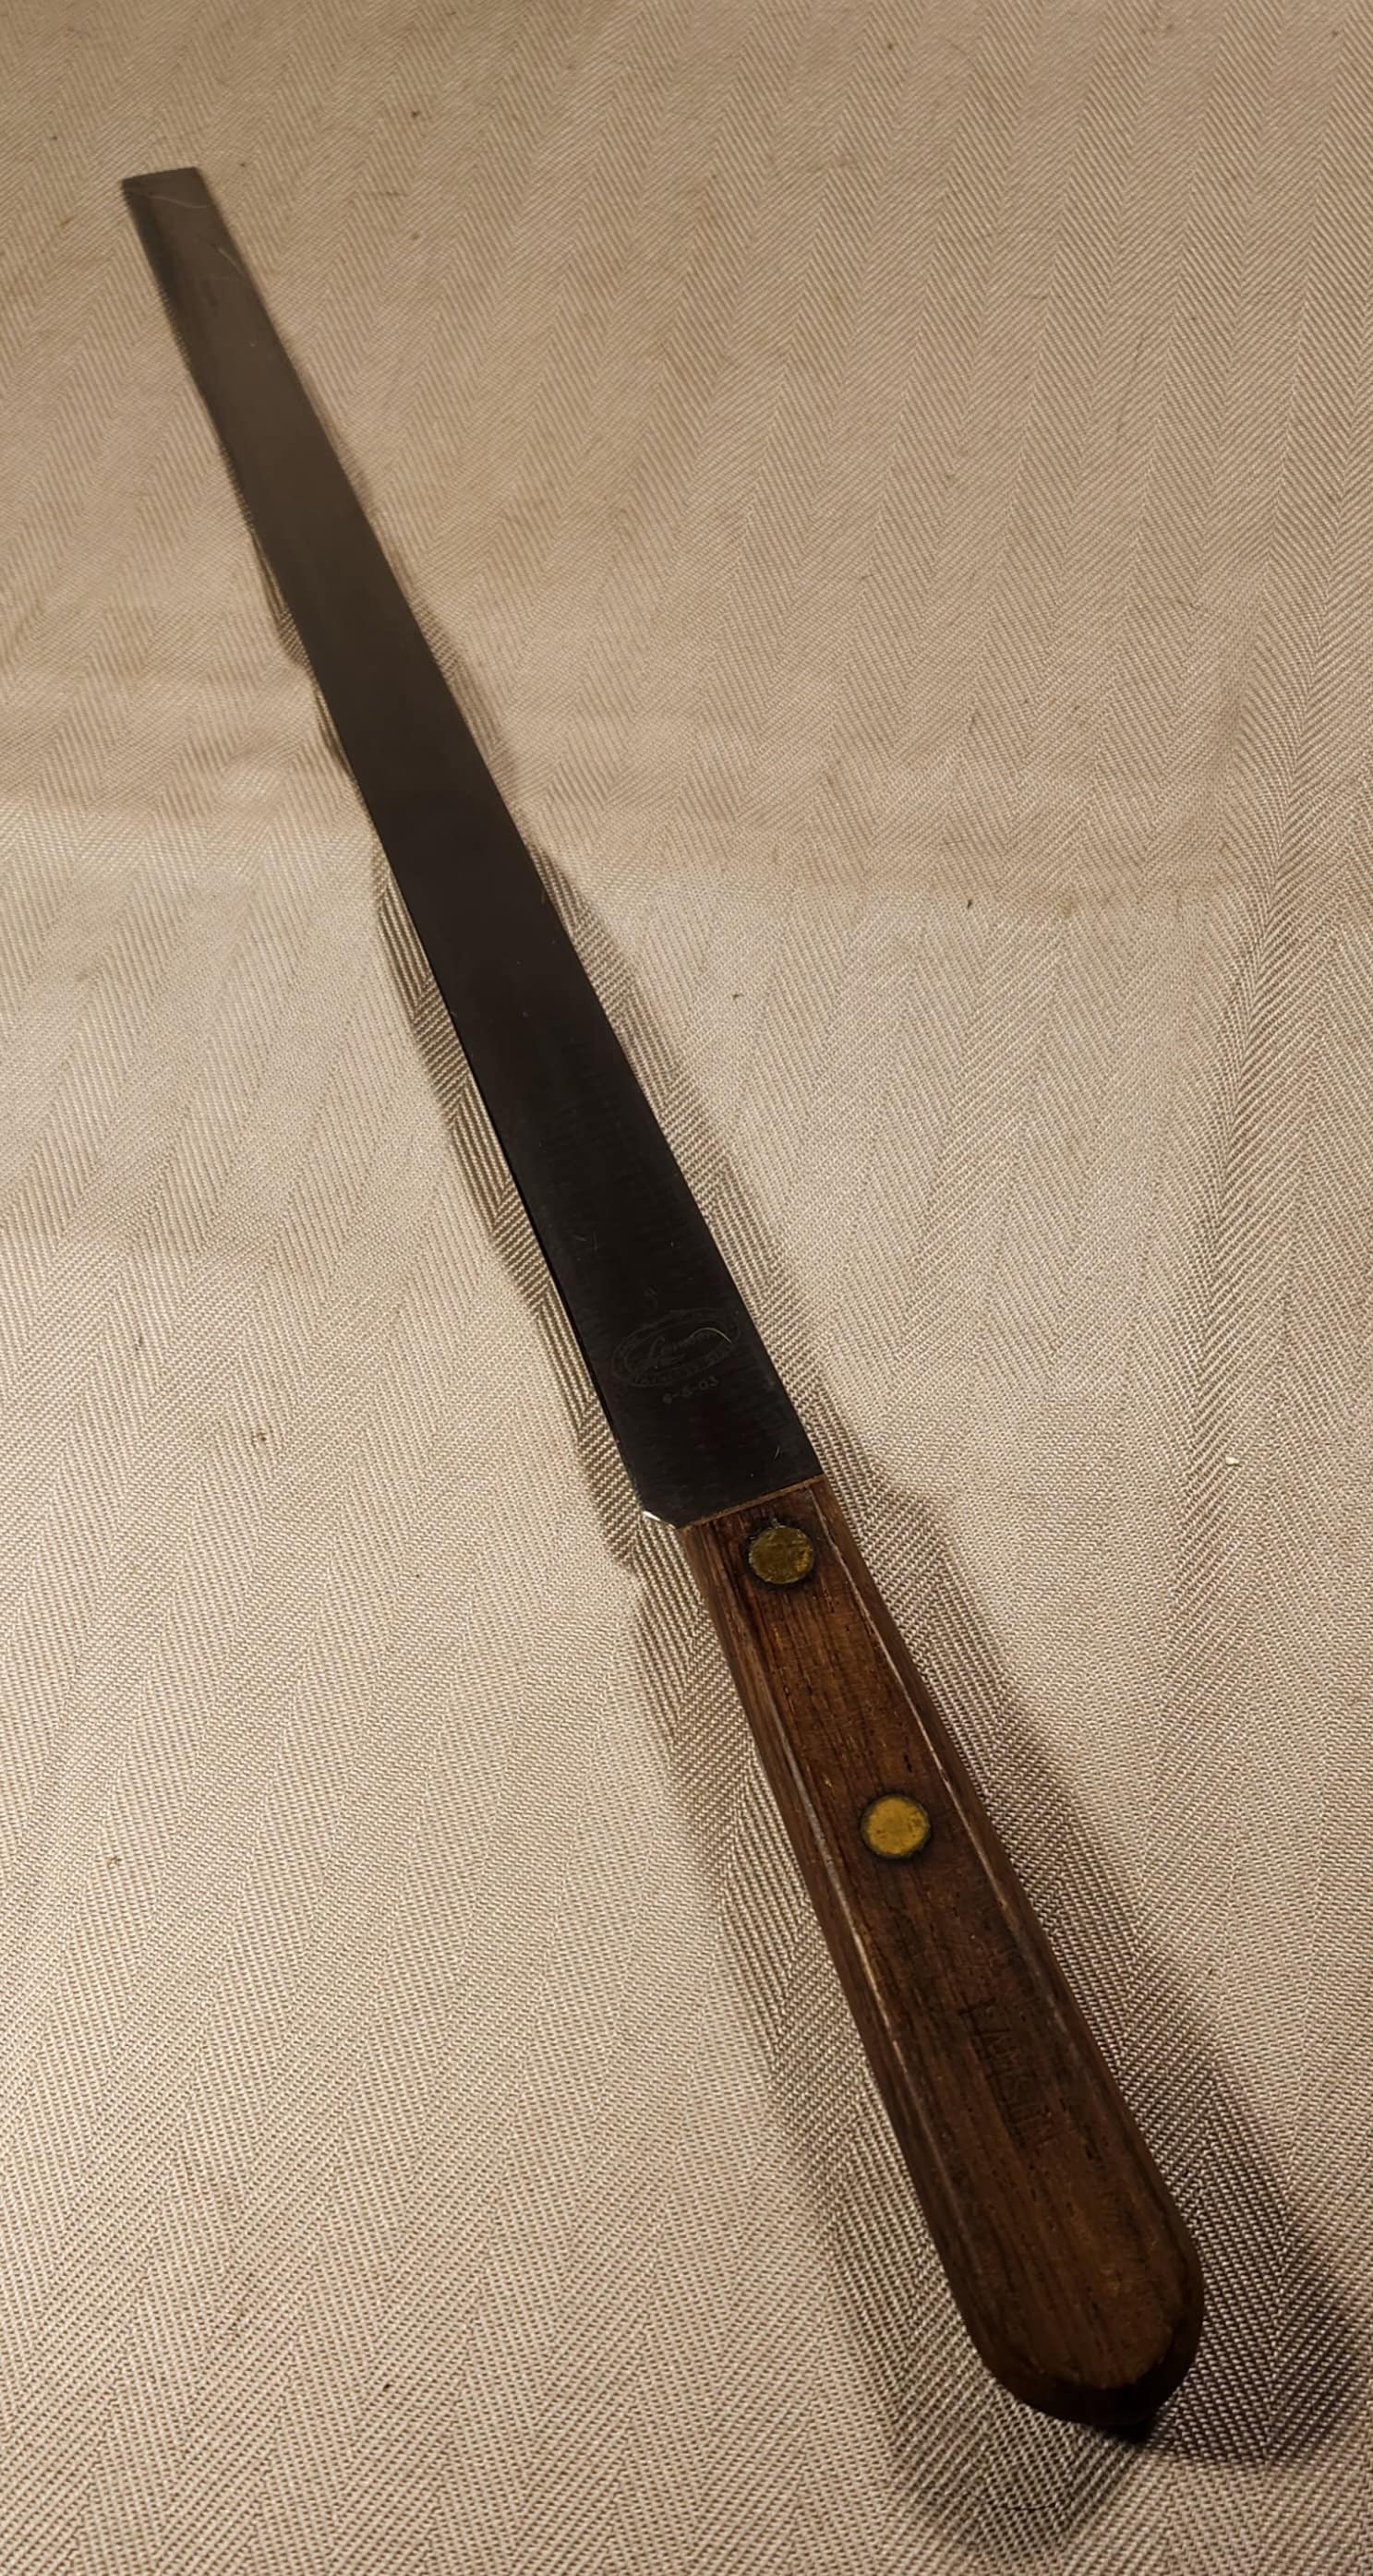 Shop Lamson's Vintage Precision Knives – Artistry Meets Innovation